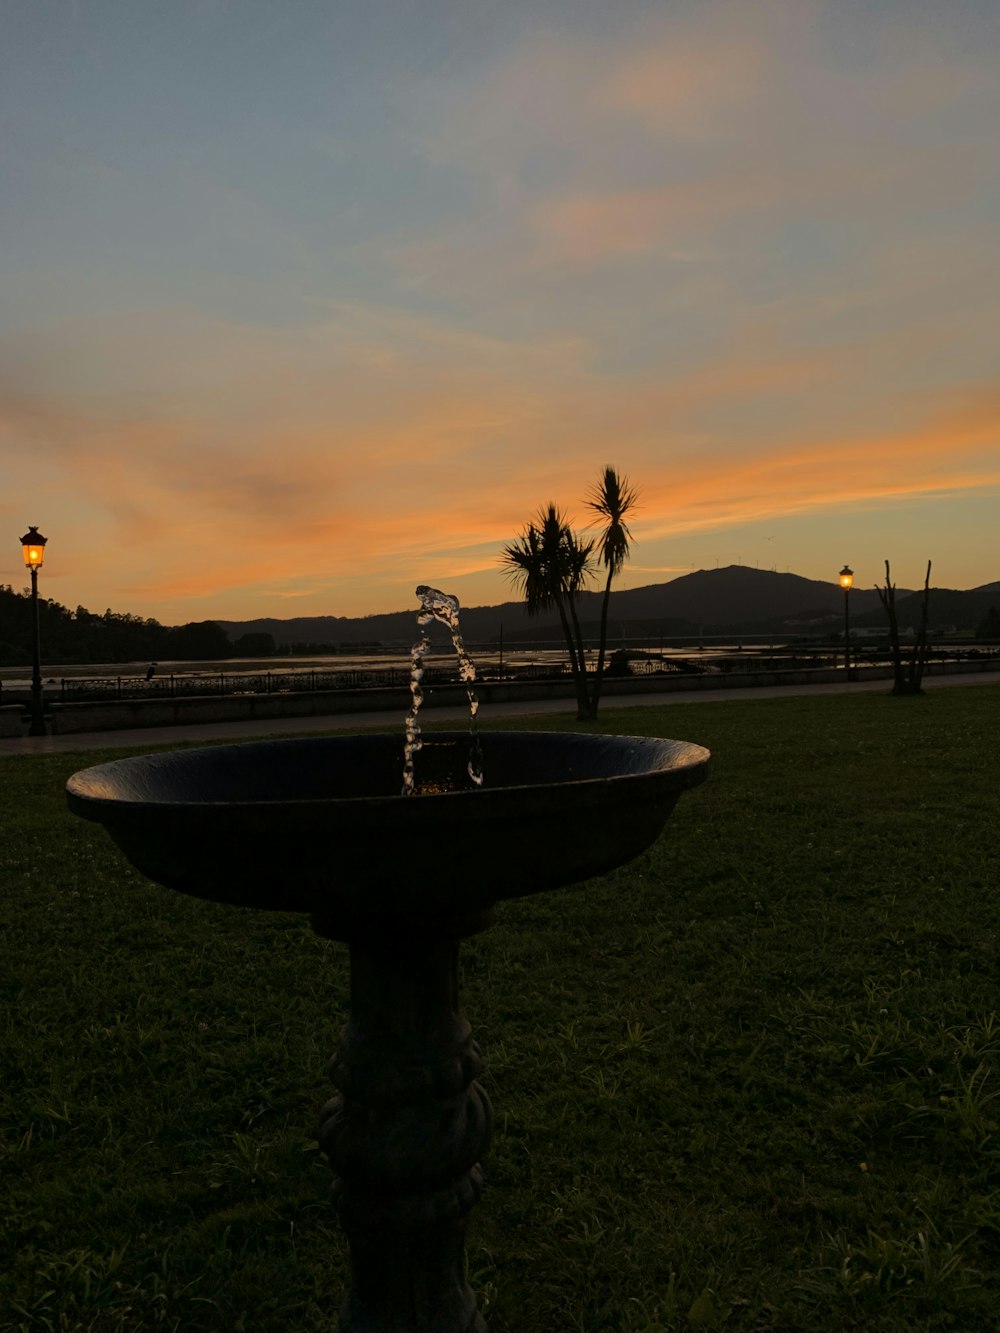 birdbath fountain at the park during golden hour